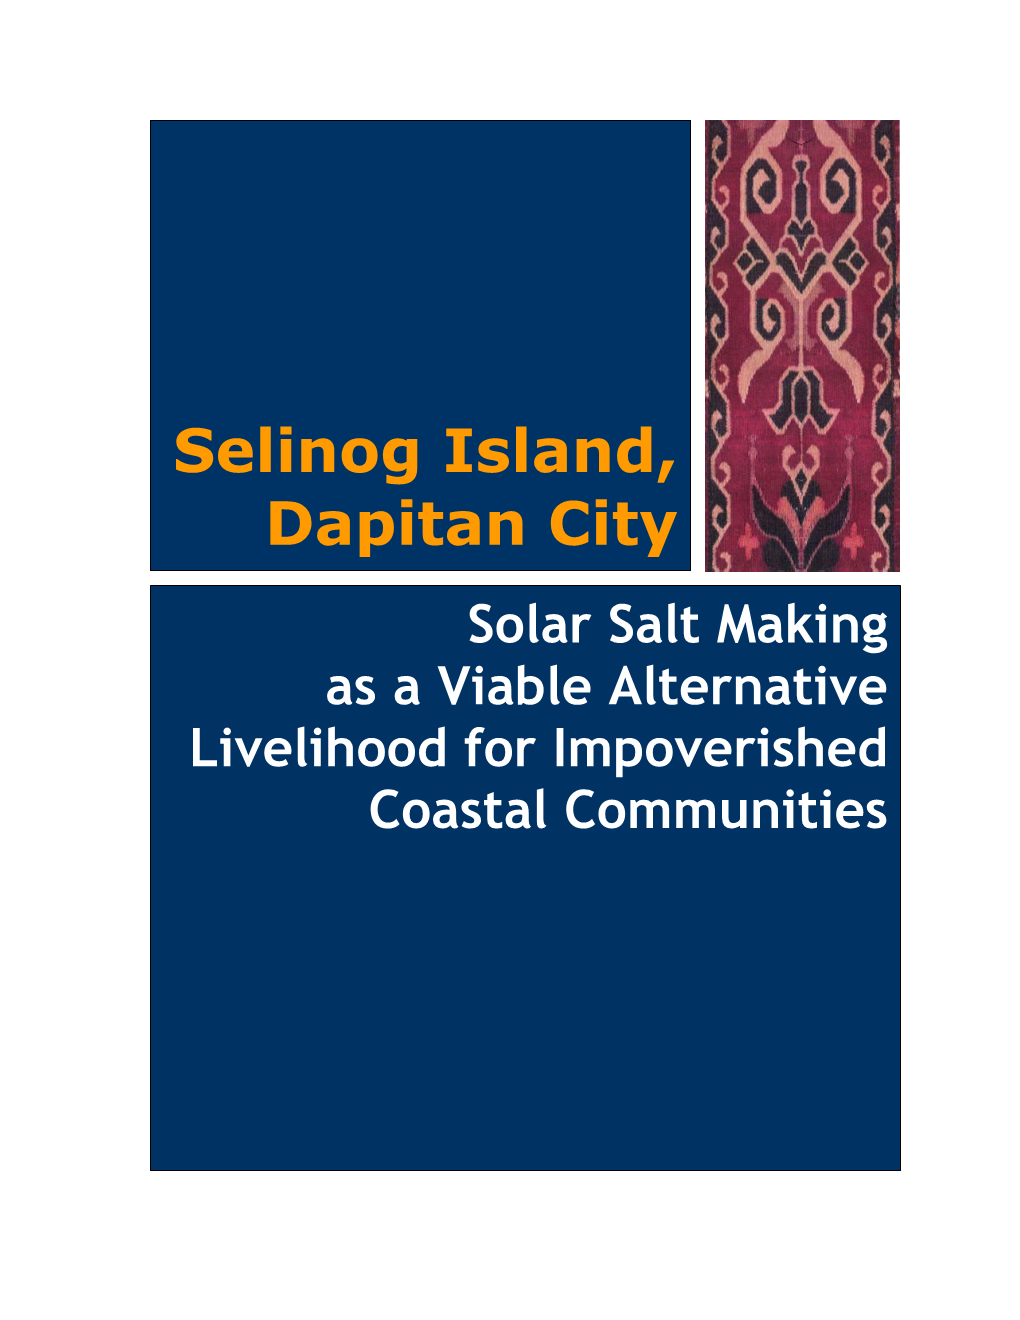 Selinog Island, Dapitan City Solar Salt Making As a Viable Alternative Livelihood for Impoverished Coastal Communities